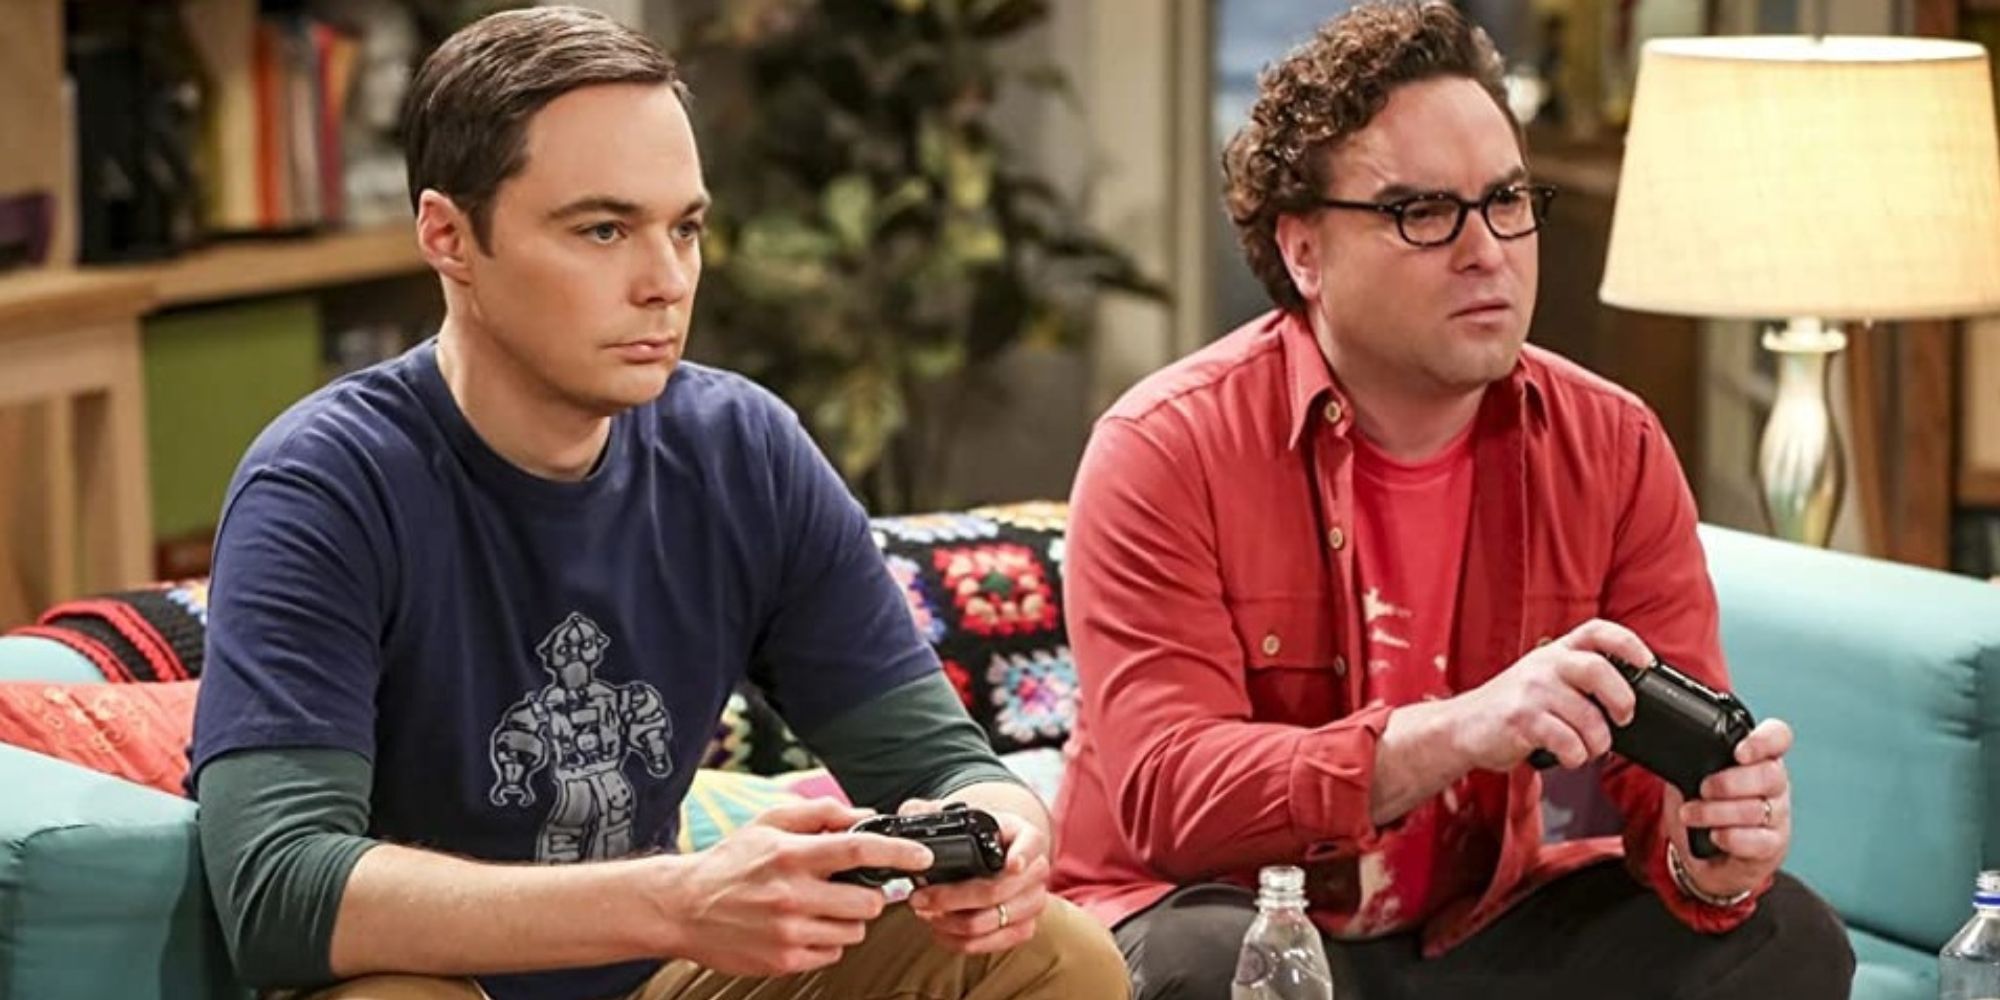 Sheldon and Leonard playing video games in 'The Big Bang Theory'